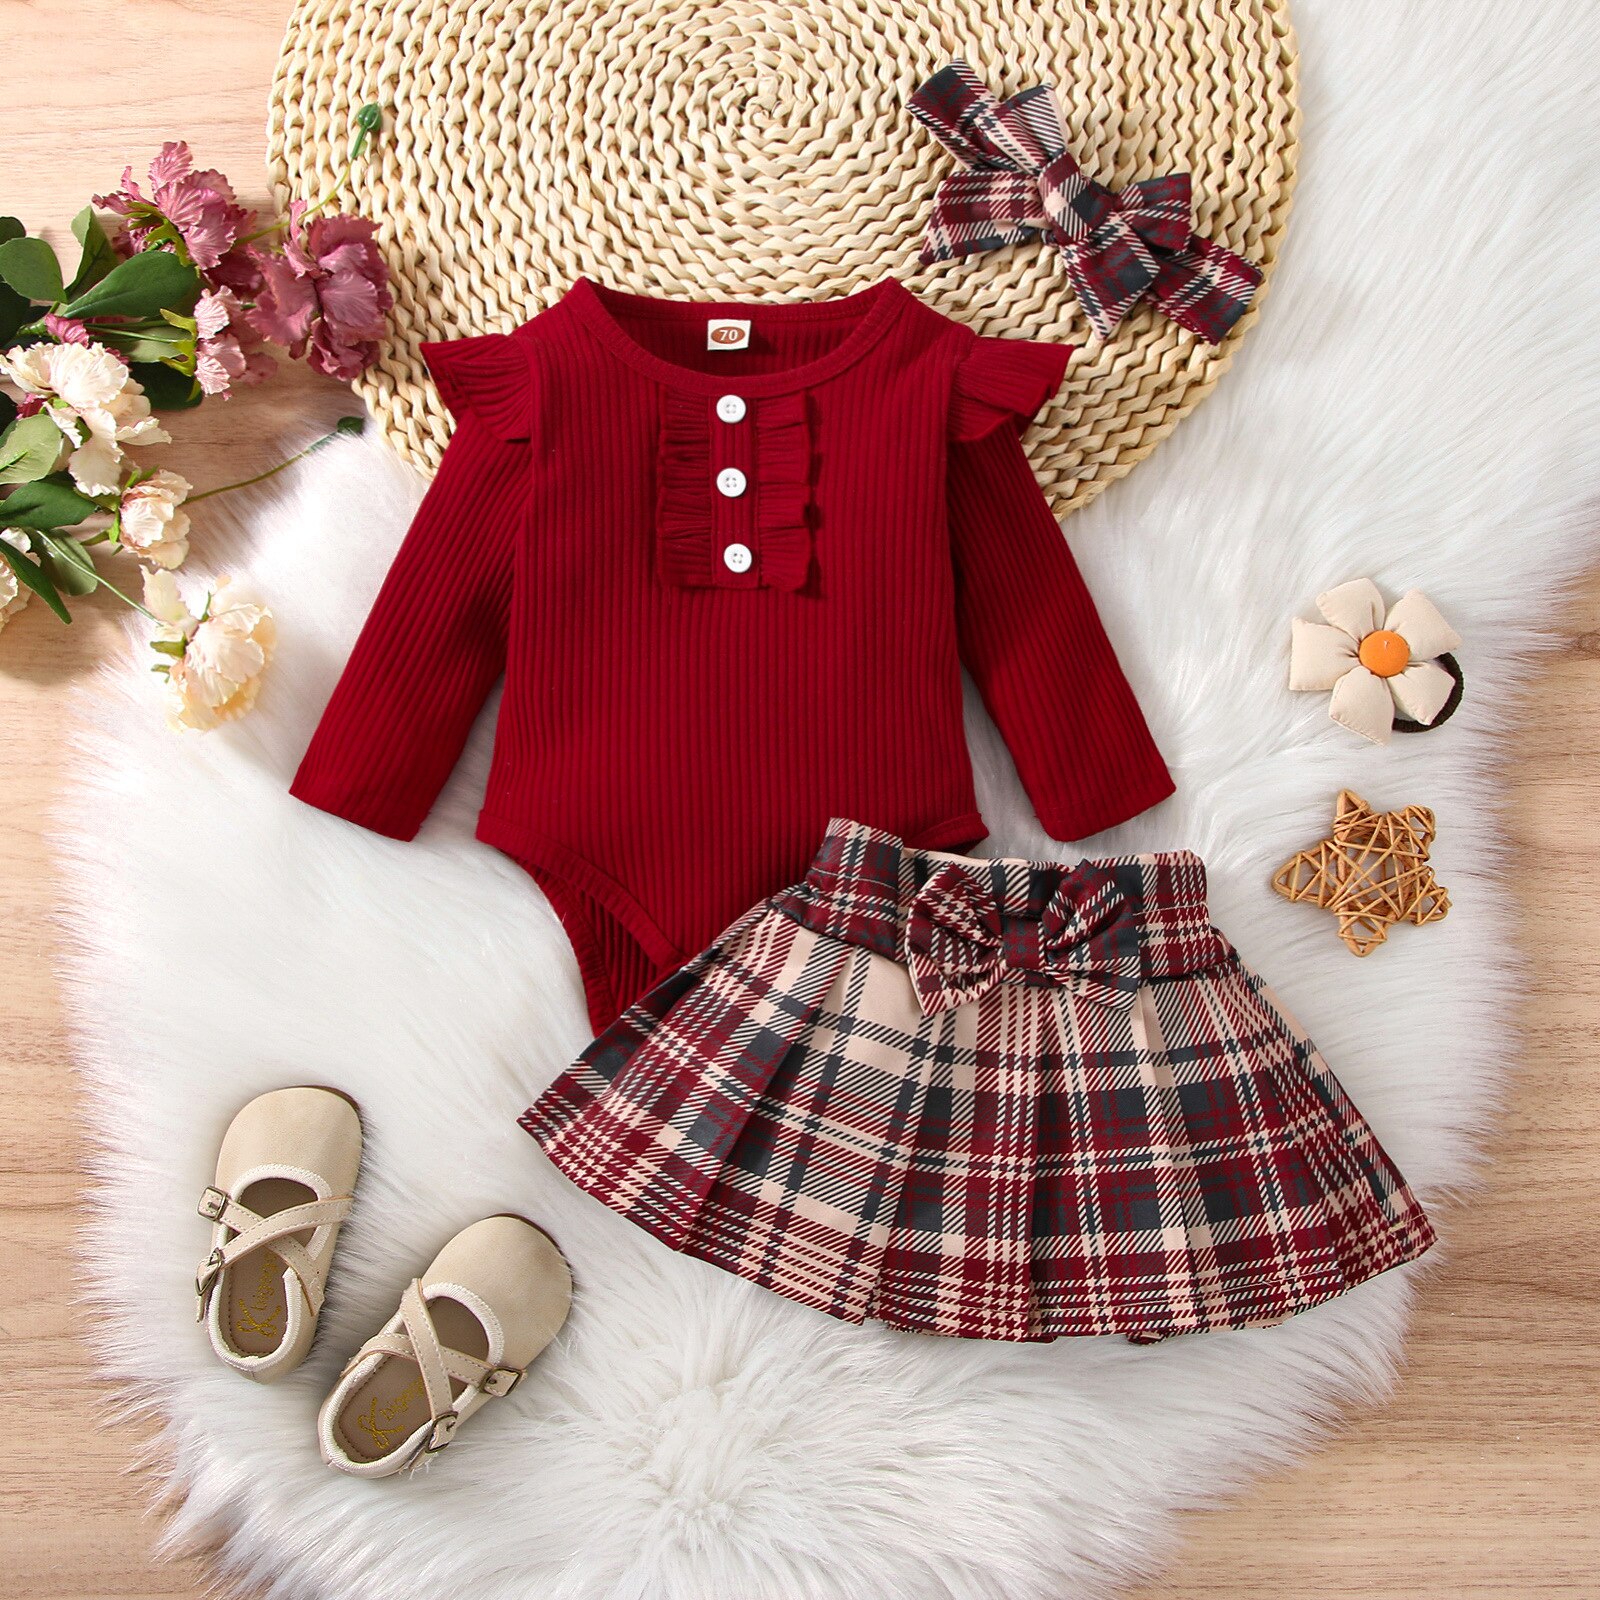 3PCS-Fall-Winter-Newborn-Baby-Girl-Clothes-Set-Long-Sleeves-Knitted-Top-Romper-Bodysuit-Skirt-Set-1